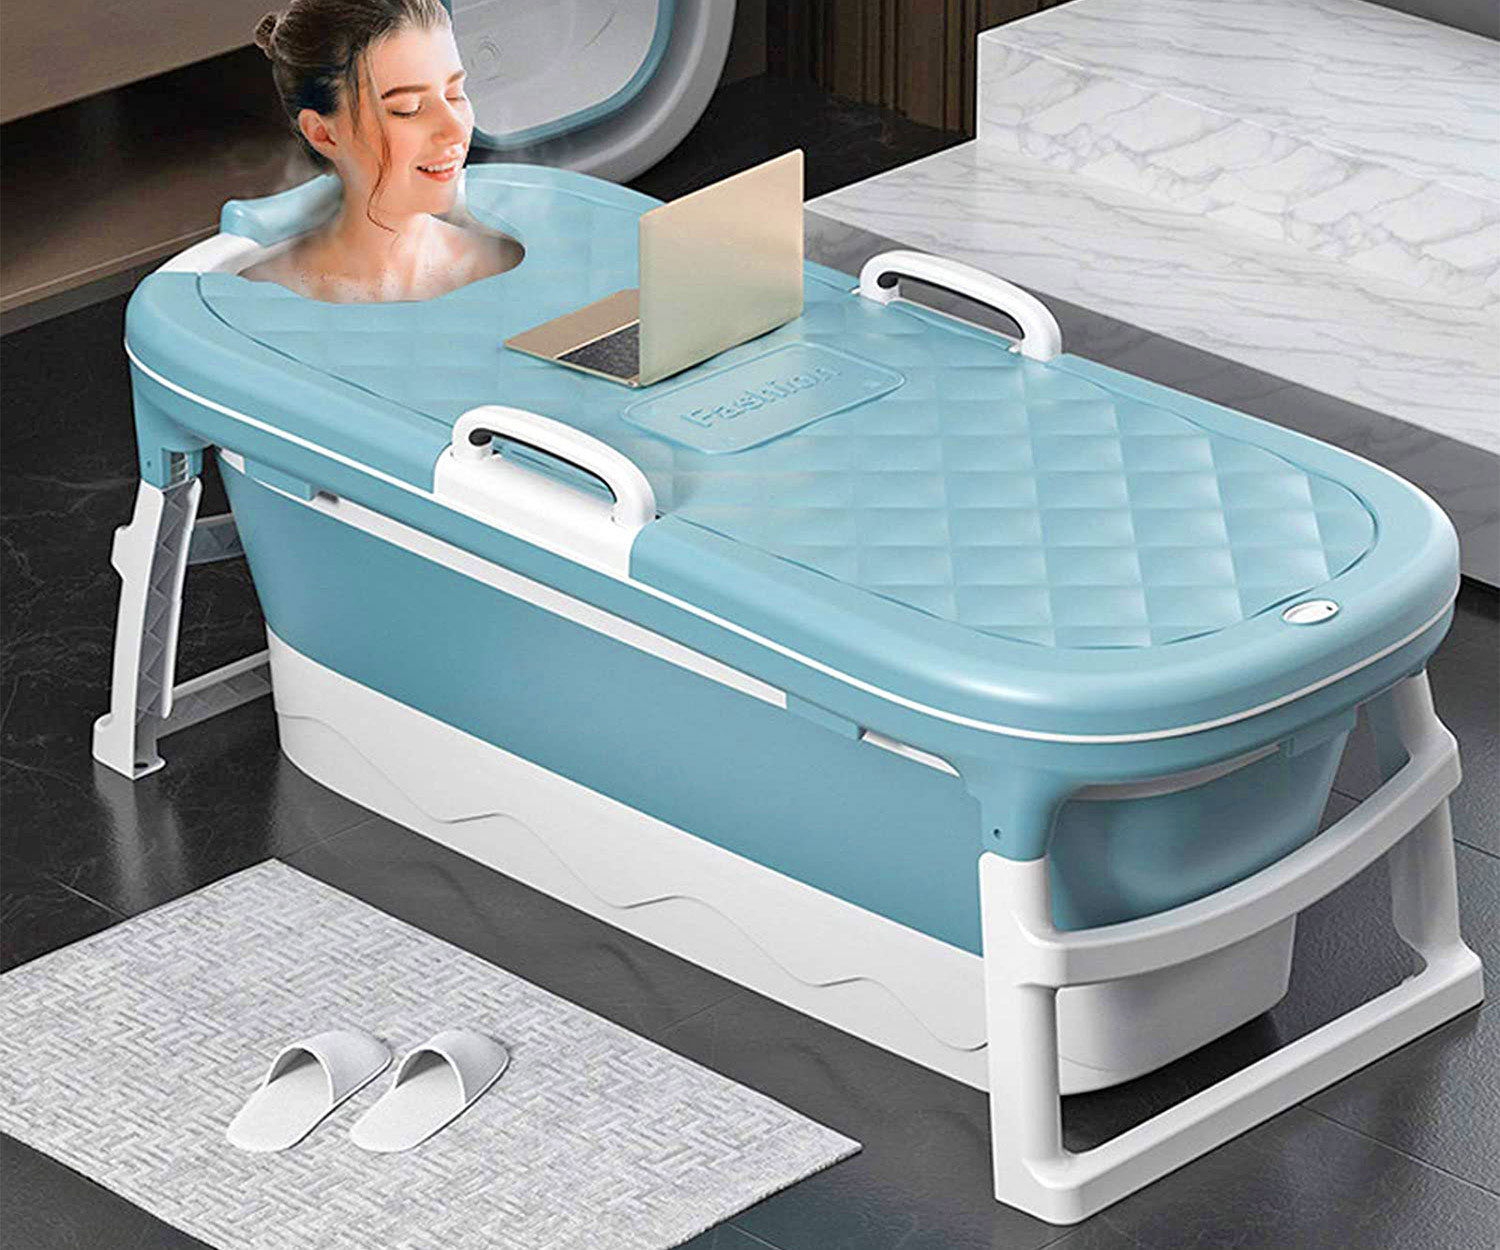 The Portable Foldable Bathtub